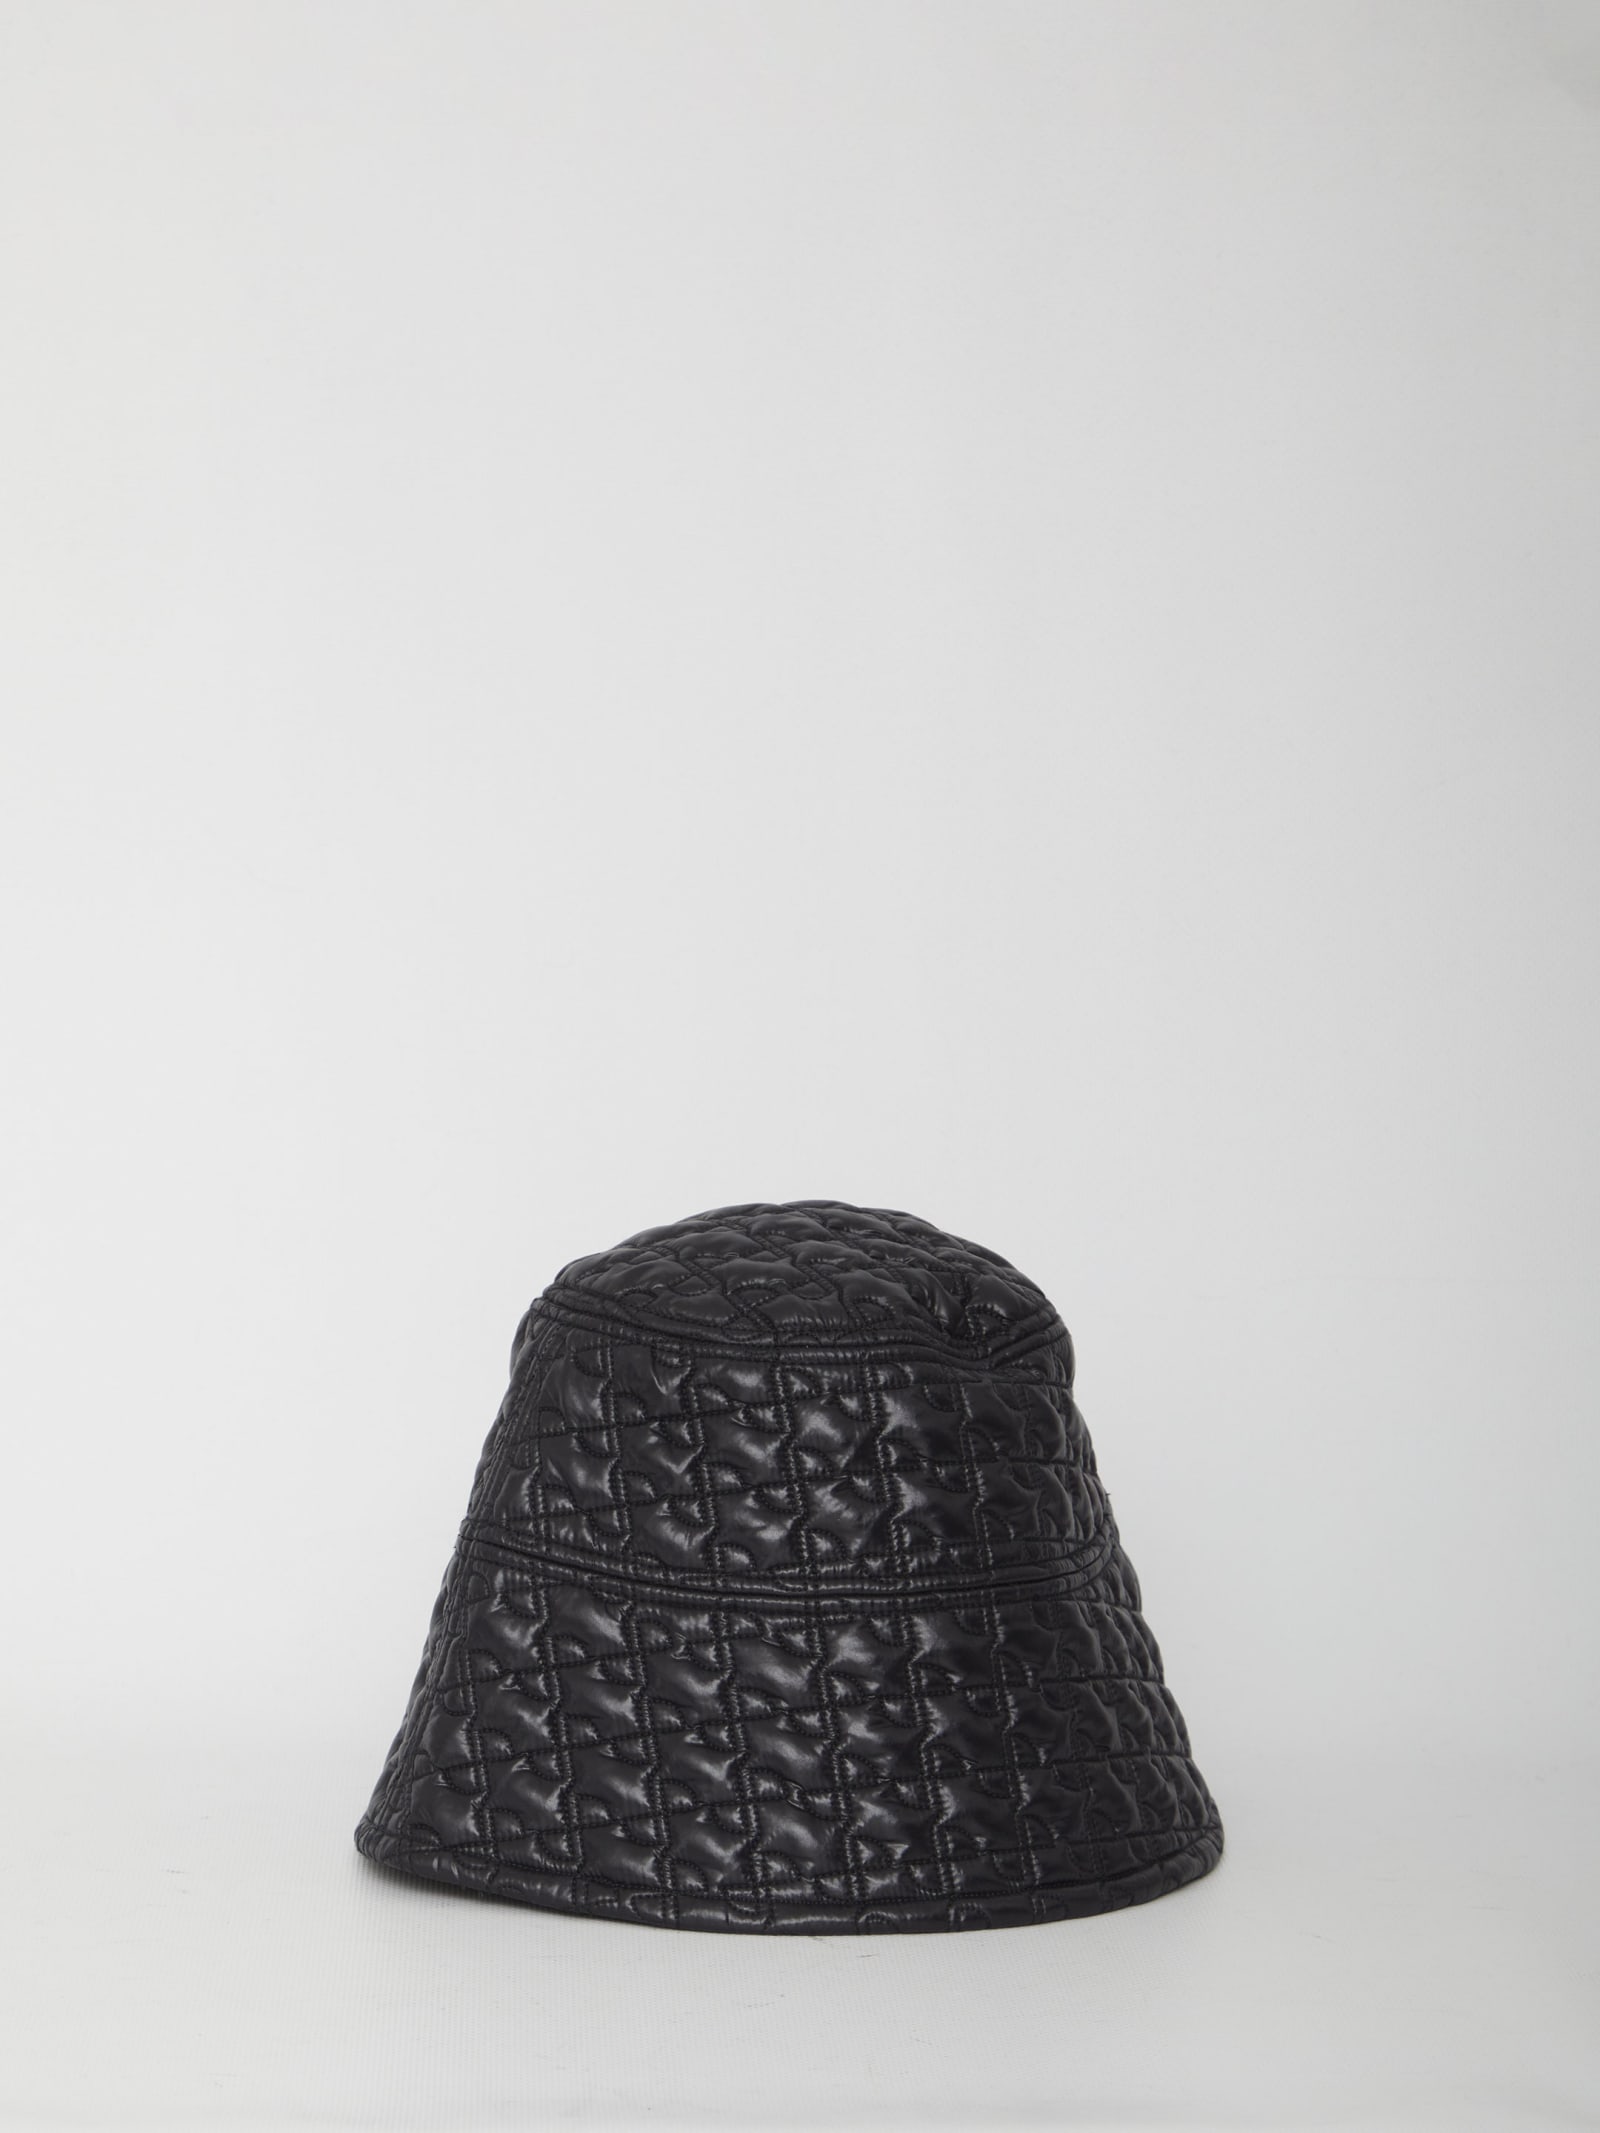 Shop Patou Bucket Hat In Black